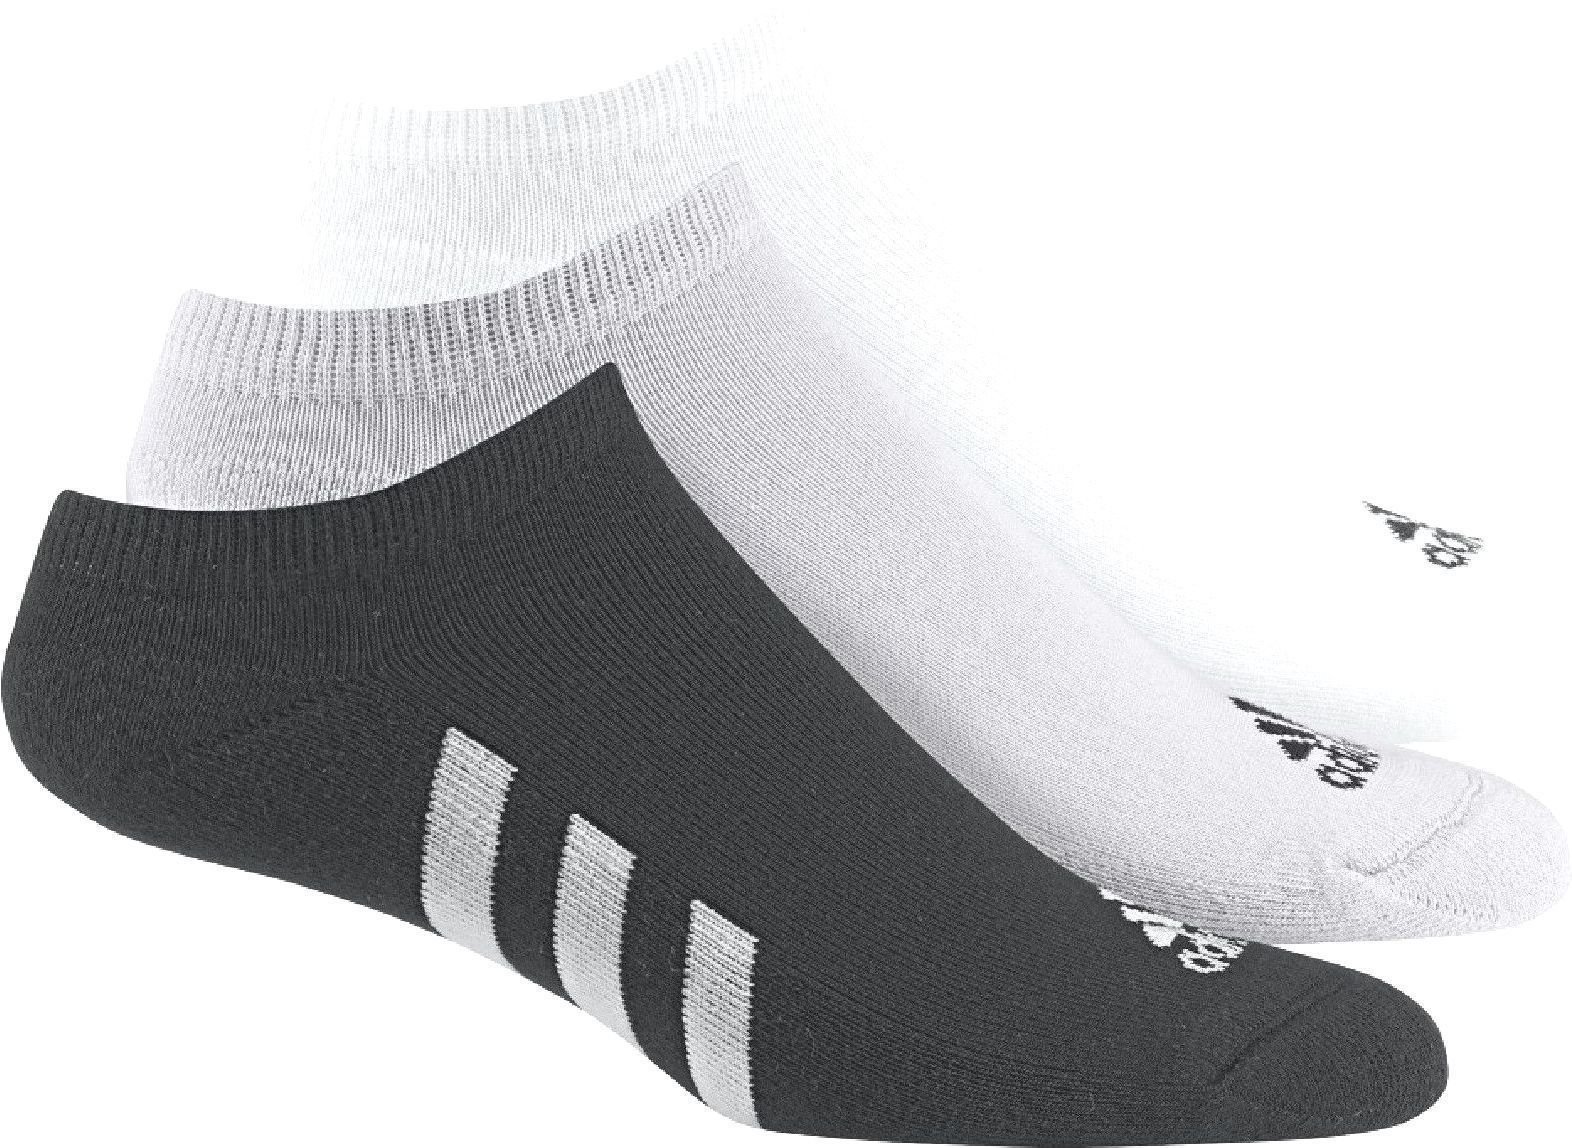 Socks Adidas 3-Pack No Show BK/GR/WH 10-13